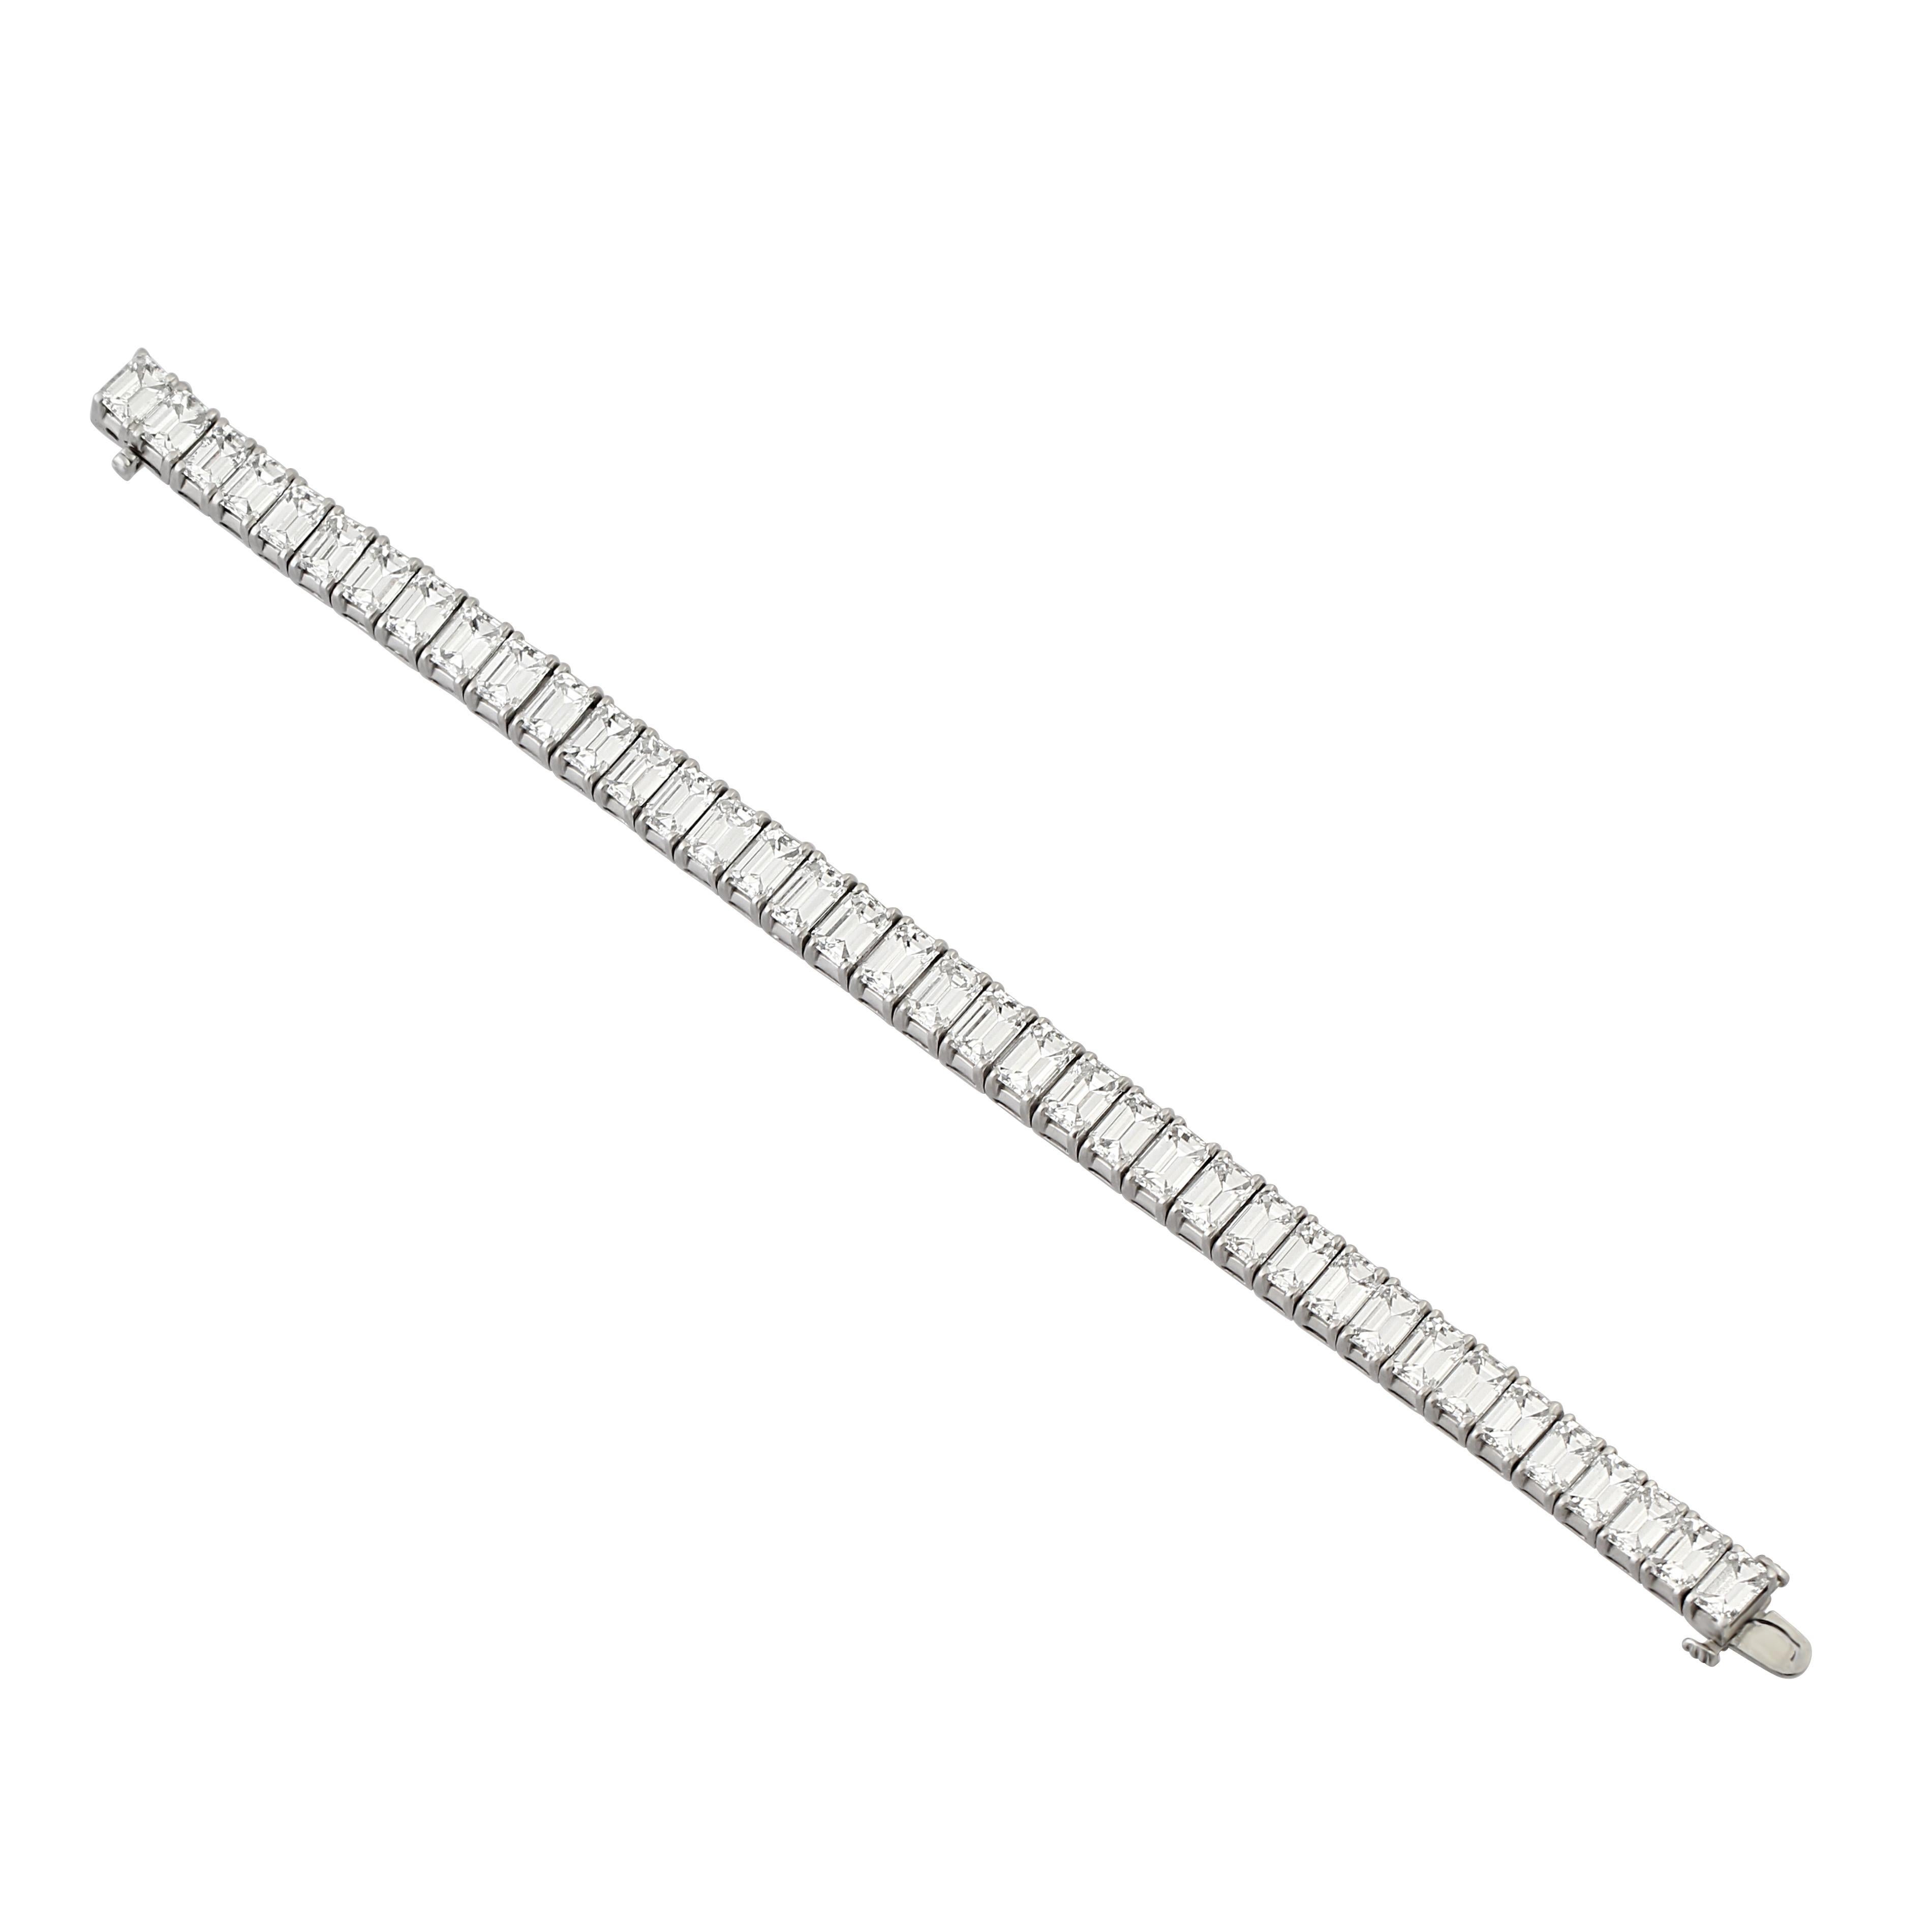 A platinum and diamond line bracelet, set with 38 step-cut diamonds. Total diamond weight = 38.15 carats.
